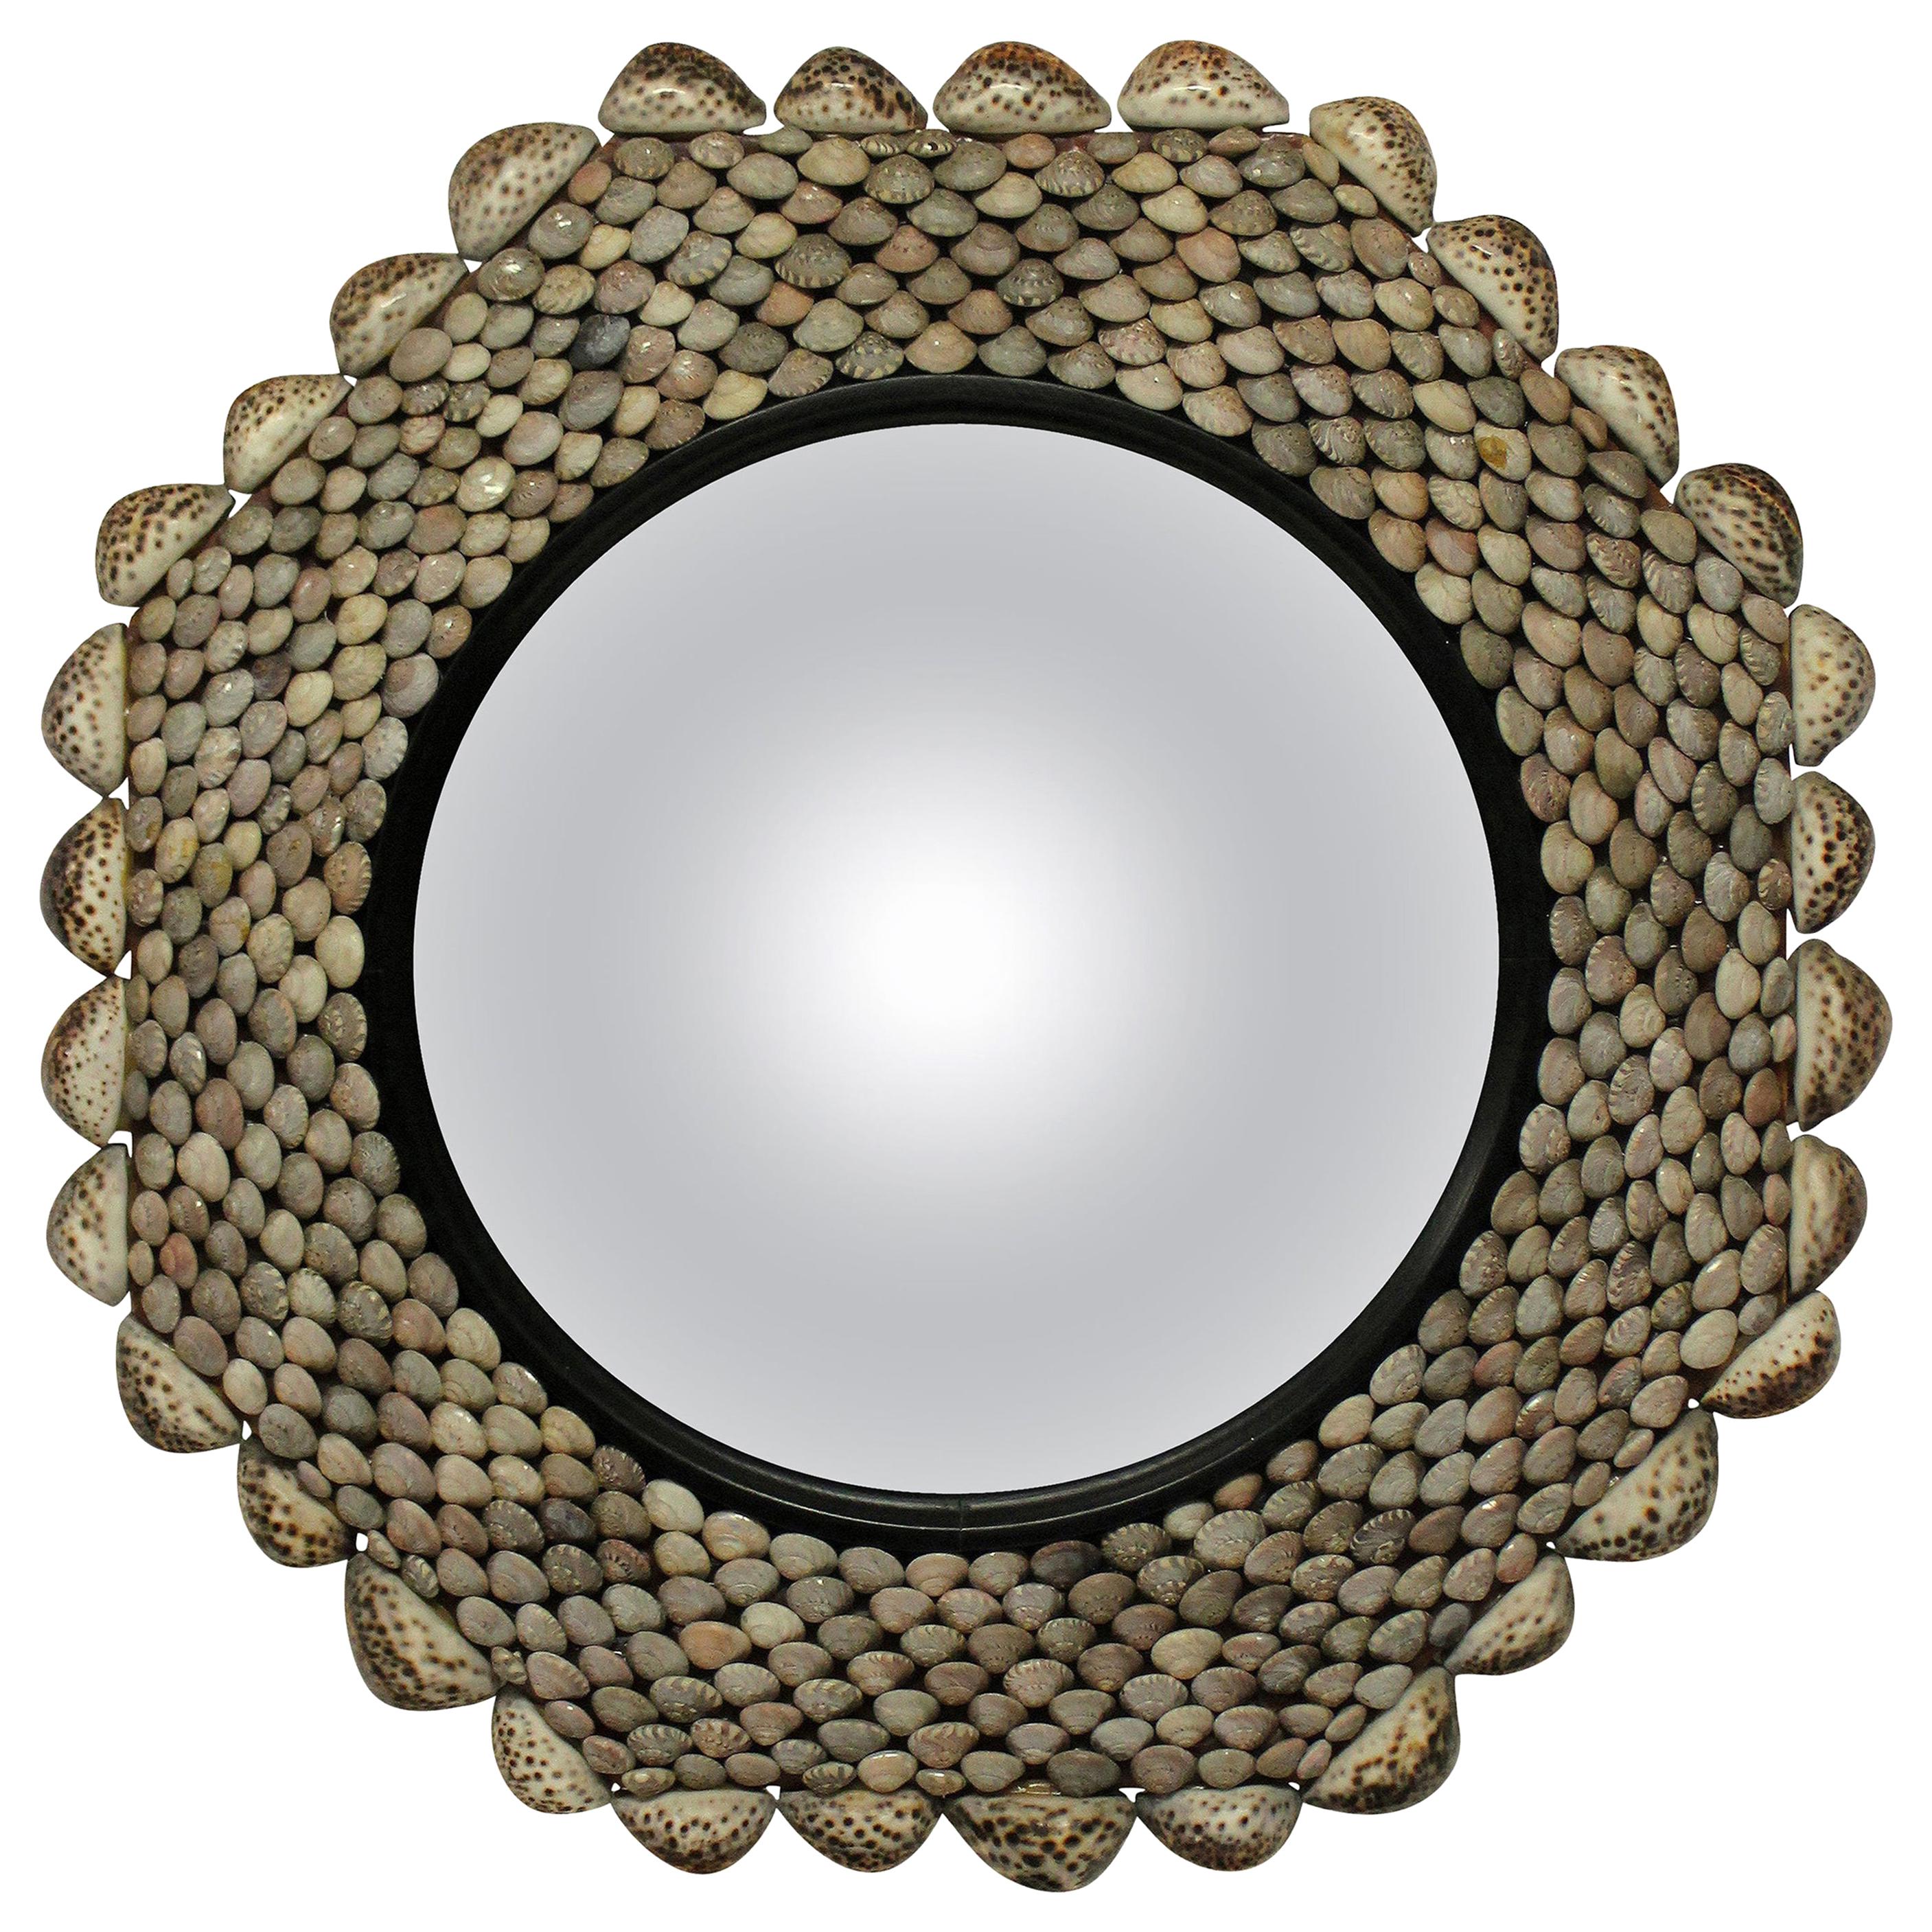 Midcentury Octagonal Shell Convex Mirror